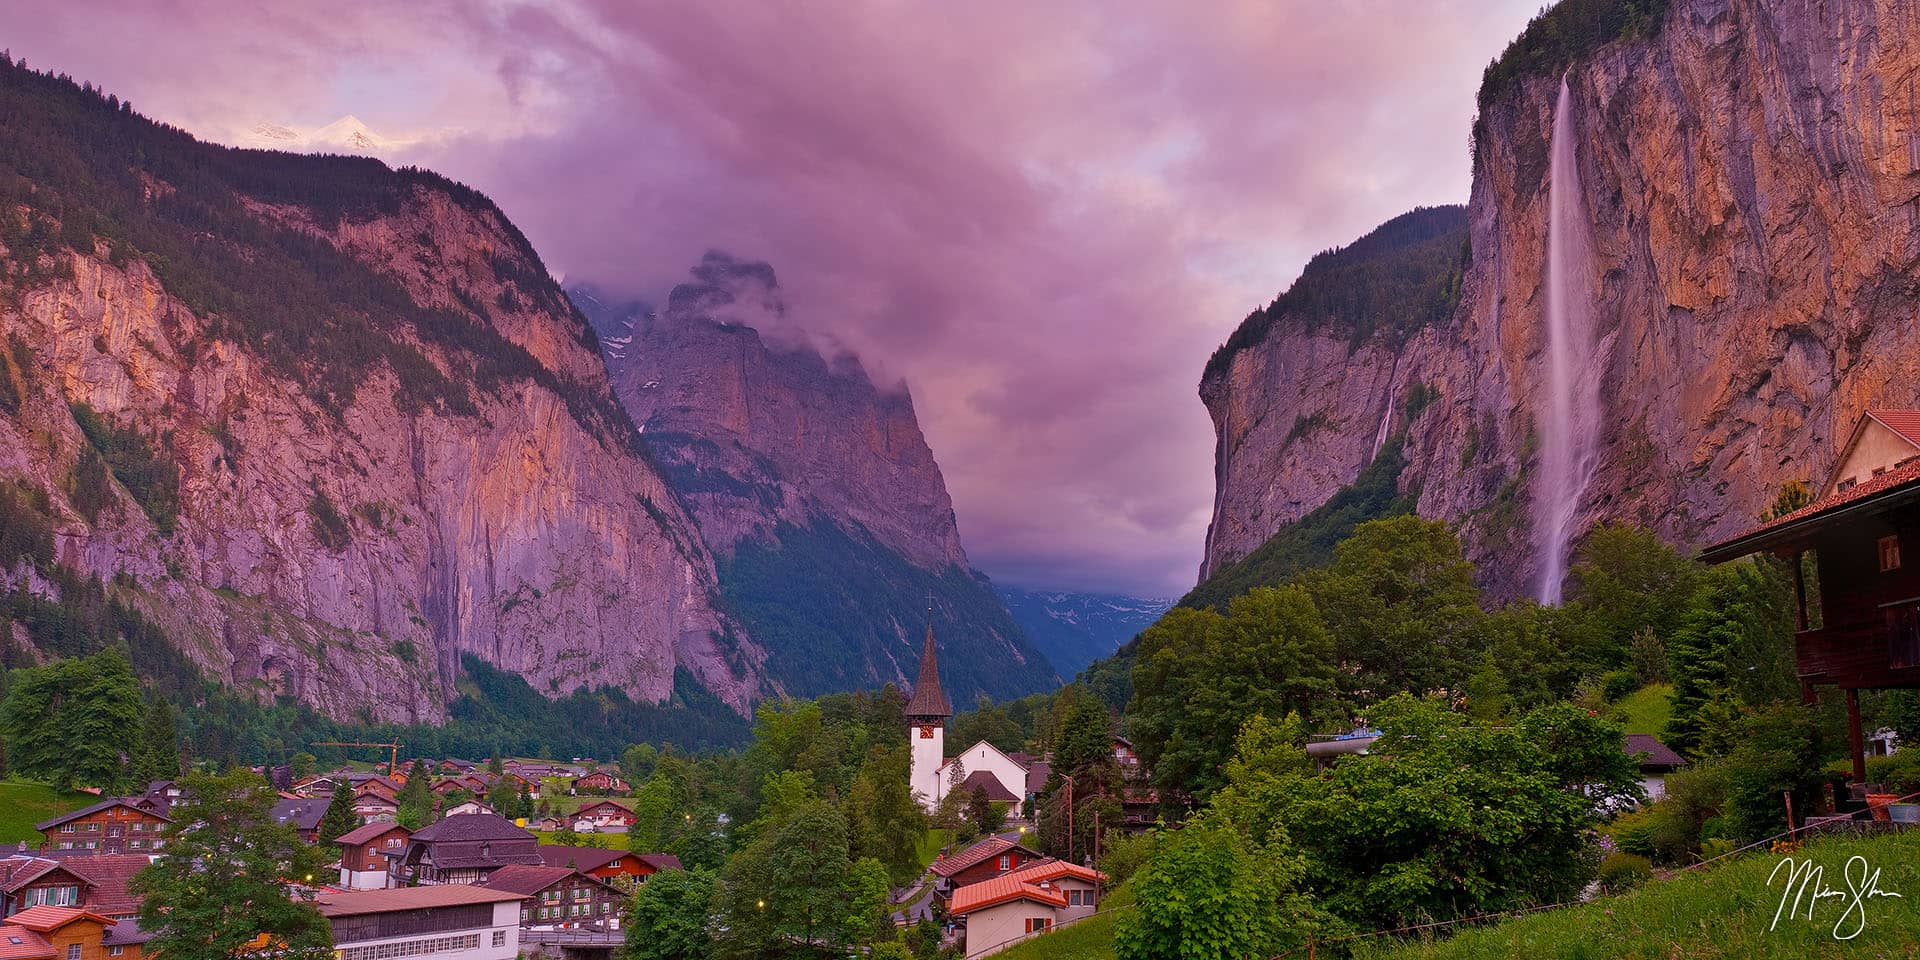 Switzerland Photography: Latuerbrunnen and the Swiss Alps at sunset